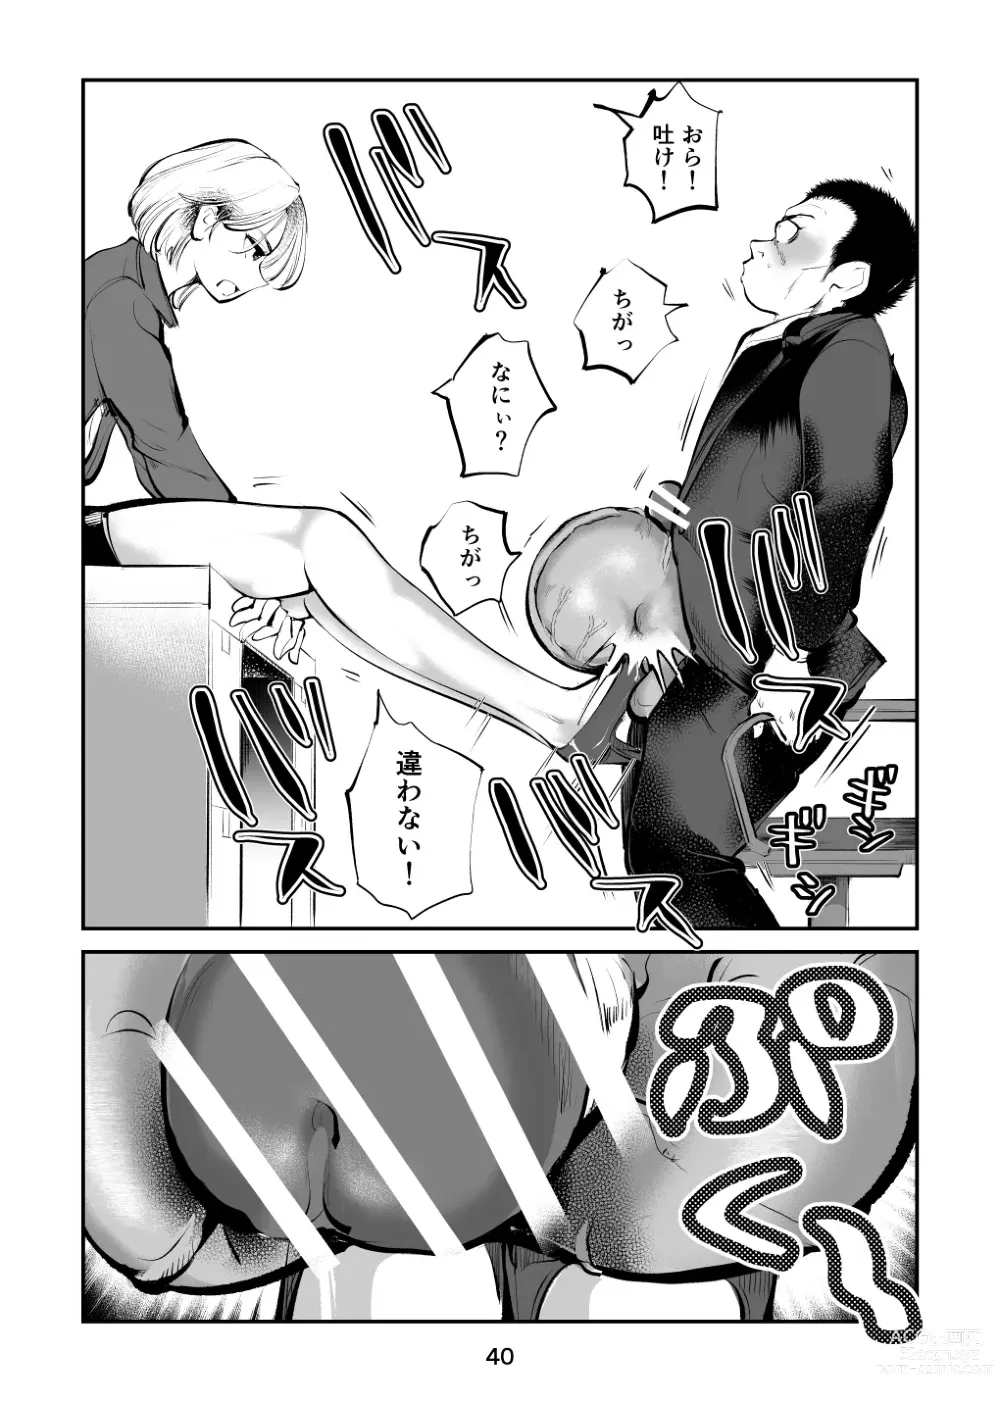 Page 40 of doujinshi Kinkeri onna keiji ryōko